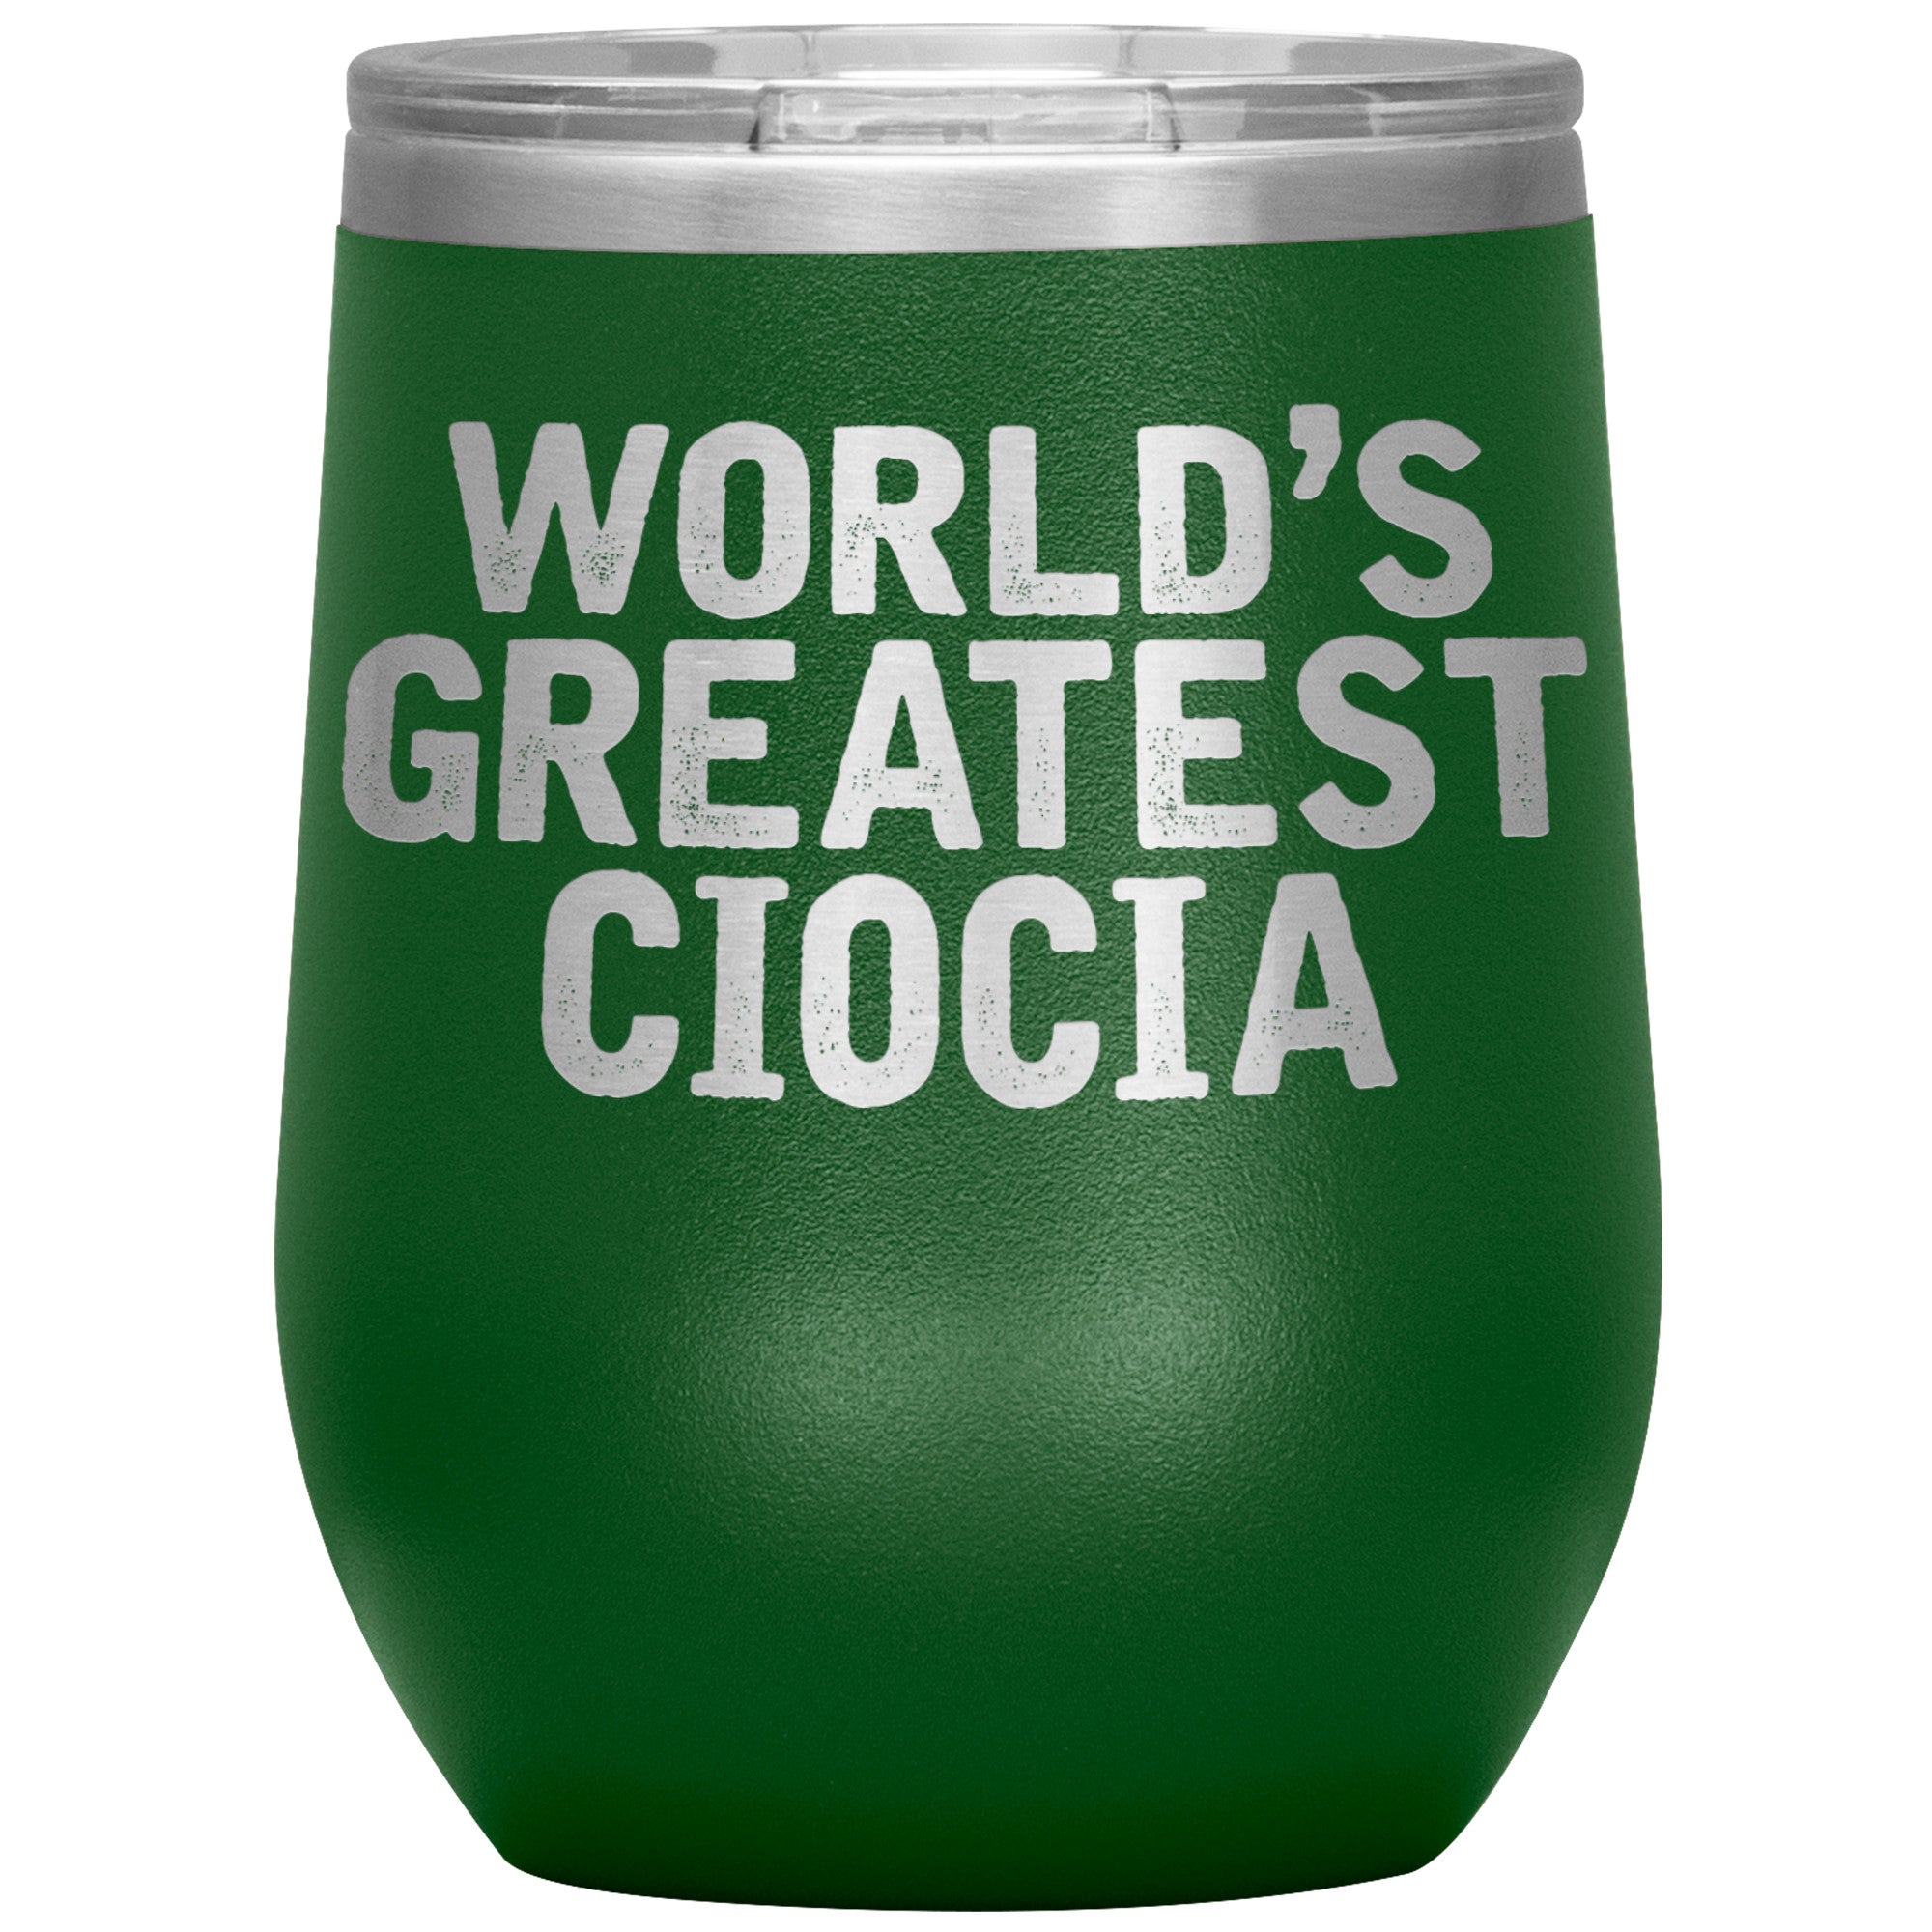 World's Greatest Ciocia Insulated Wine Tumbler Tumblers teelaunch Green  